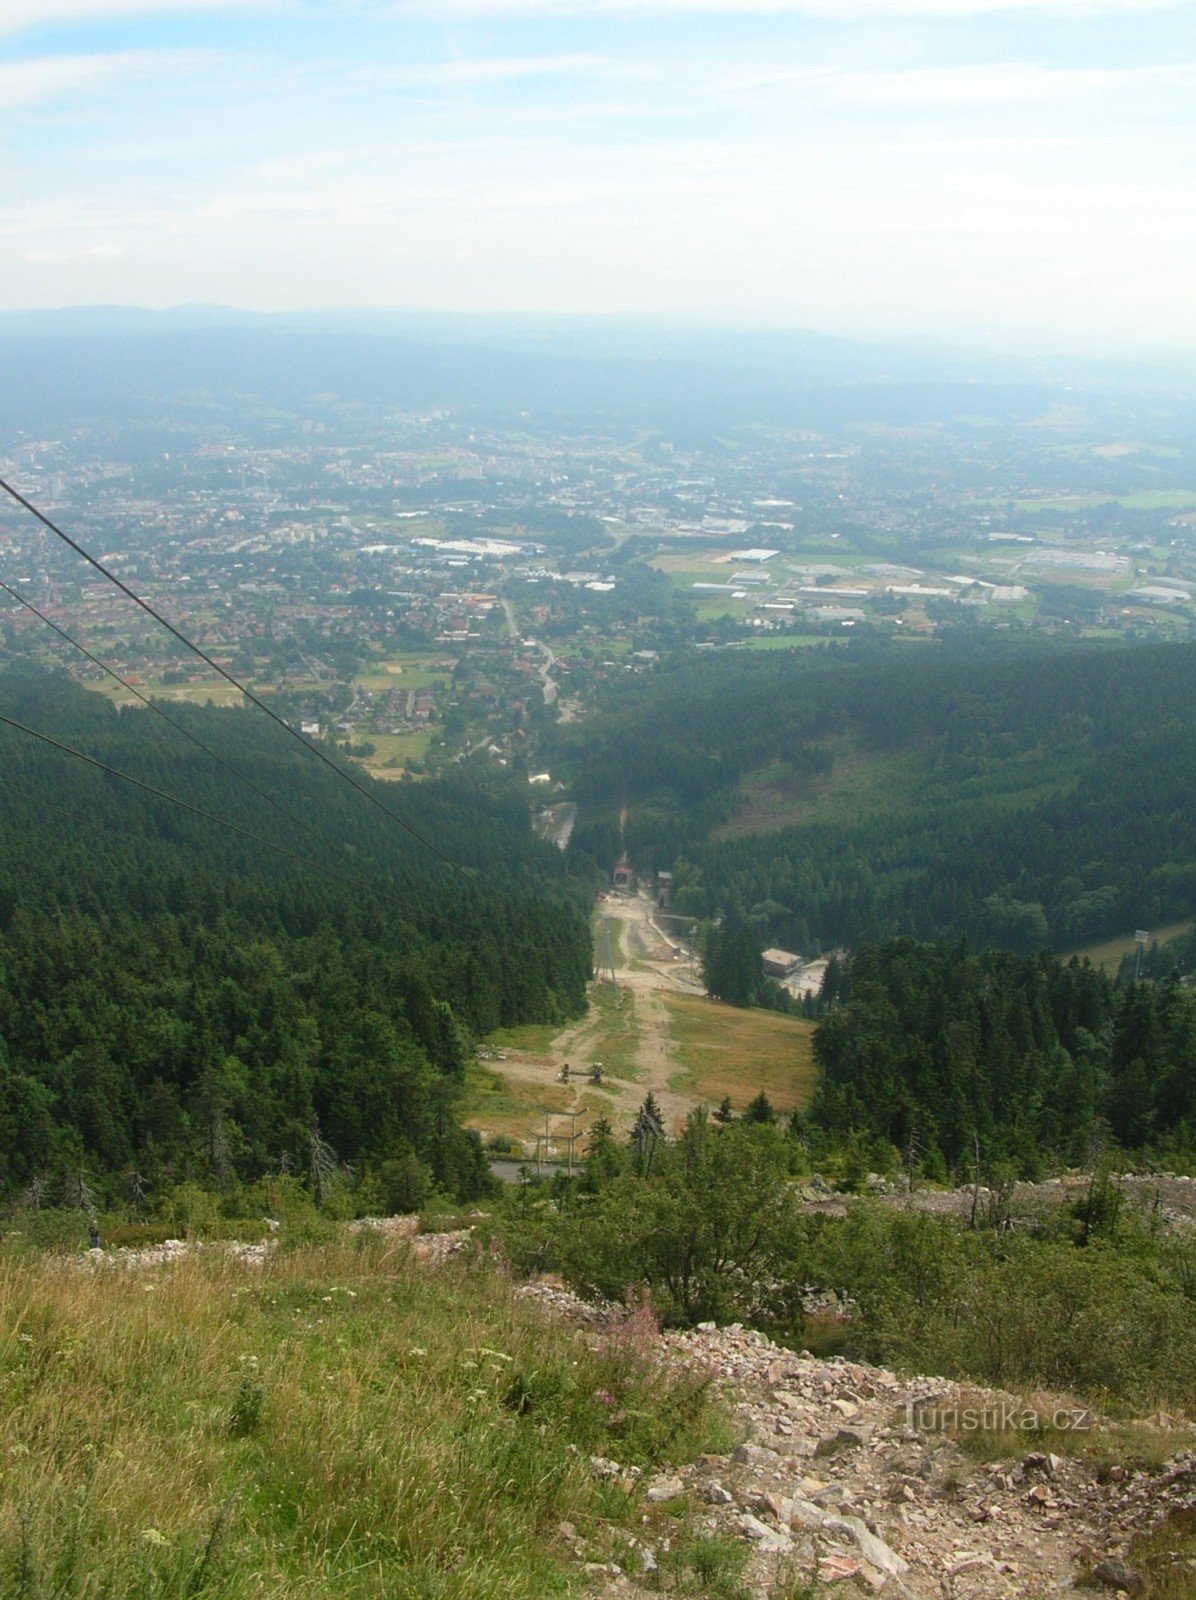 Ještěd - tour d'observation Rašovka - Liberec